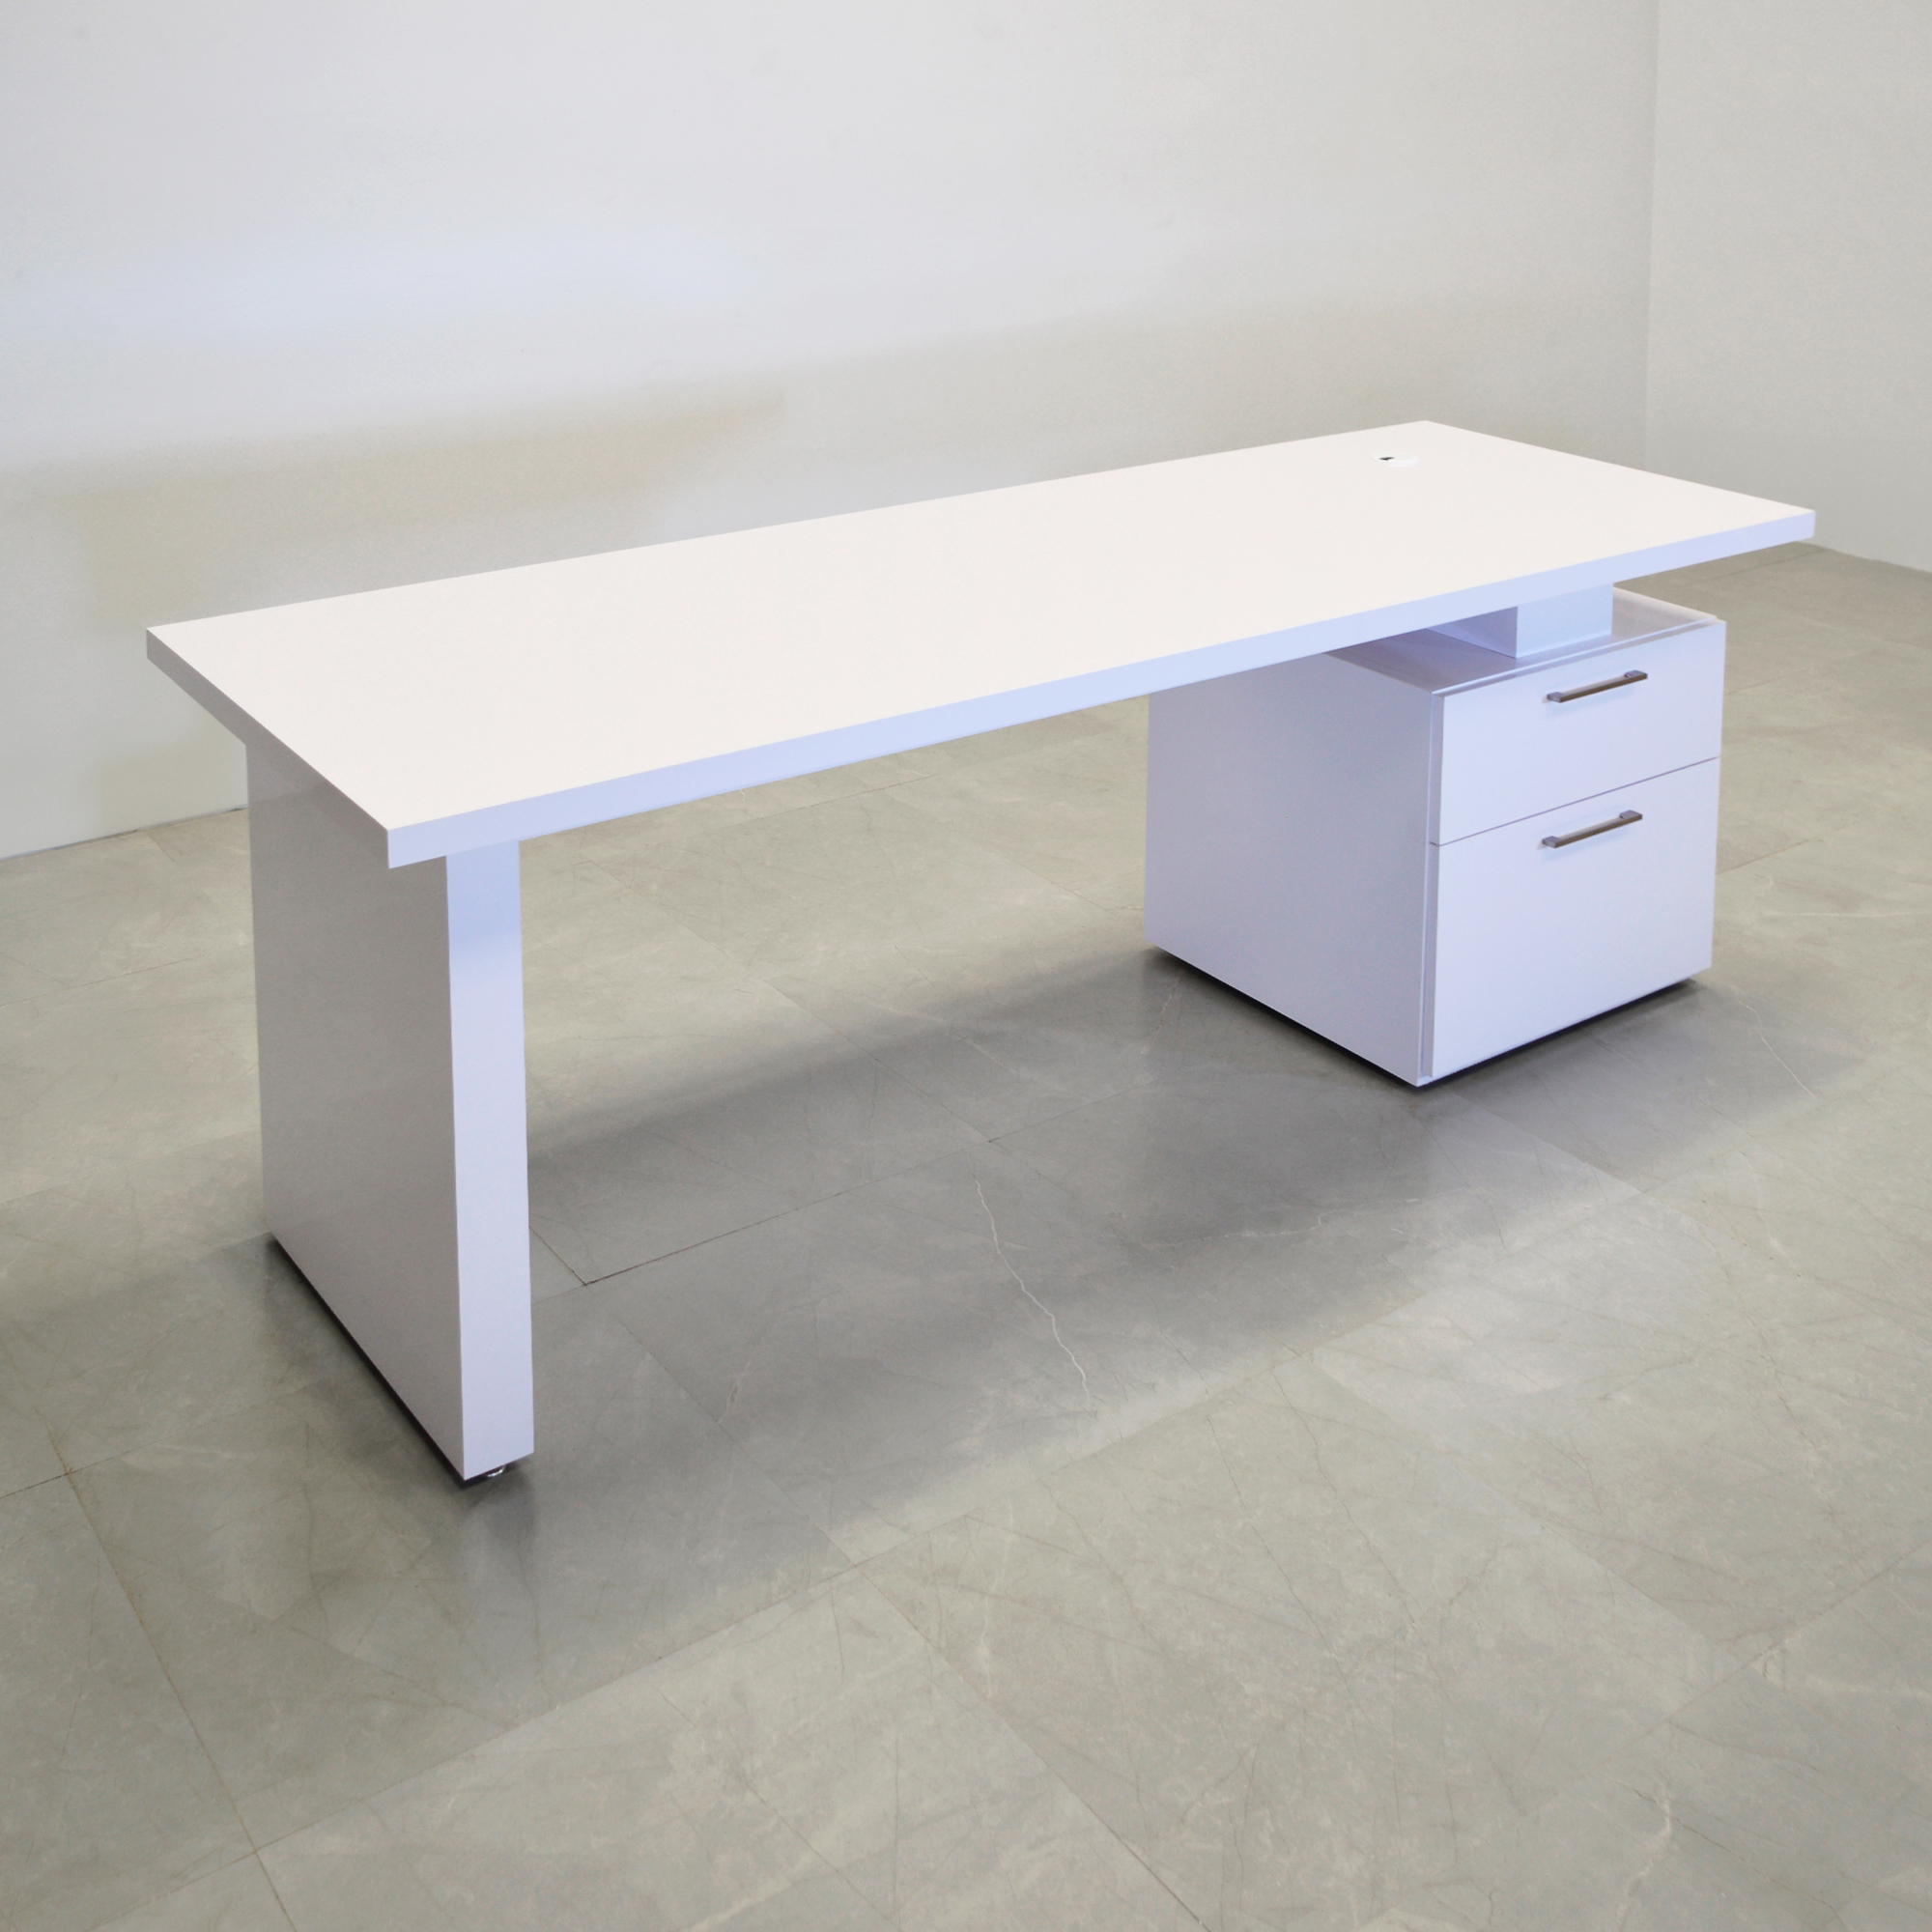 72-inch Avenue Straight Executive Desk in white gloss laminate top, base & storage, shown here.